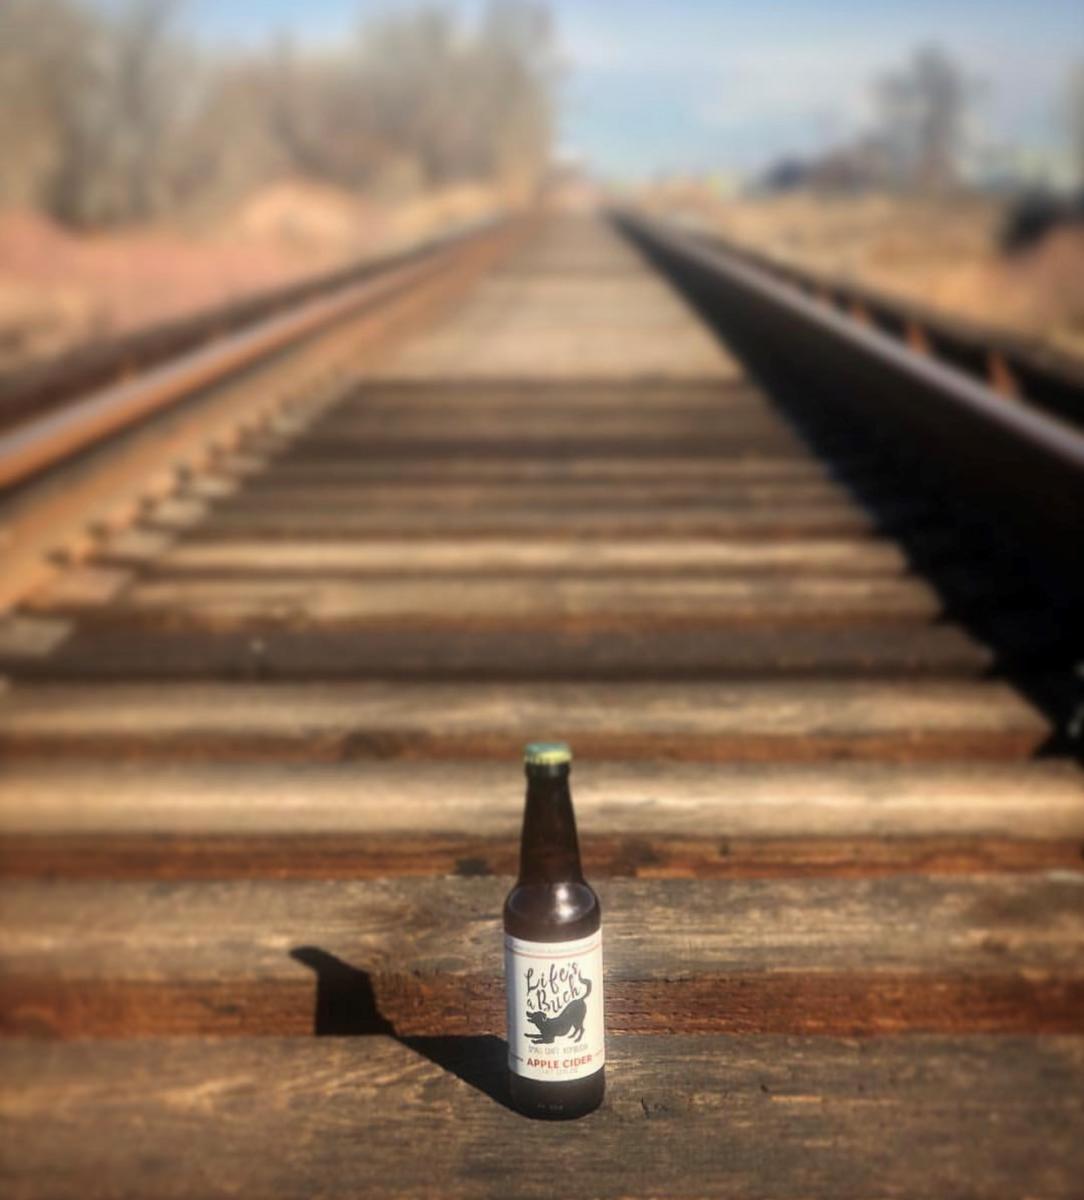 Lifes a Buch Railroad Tracks